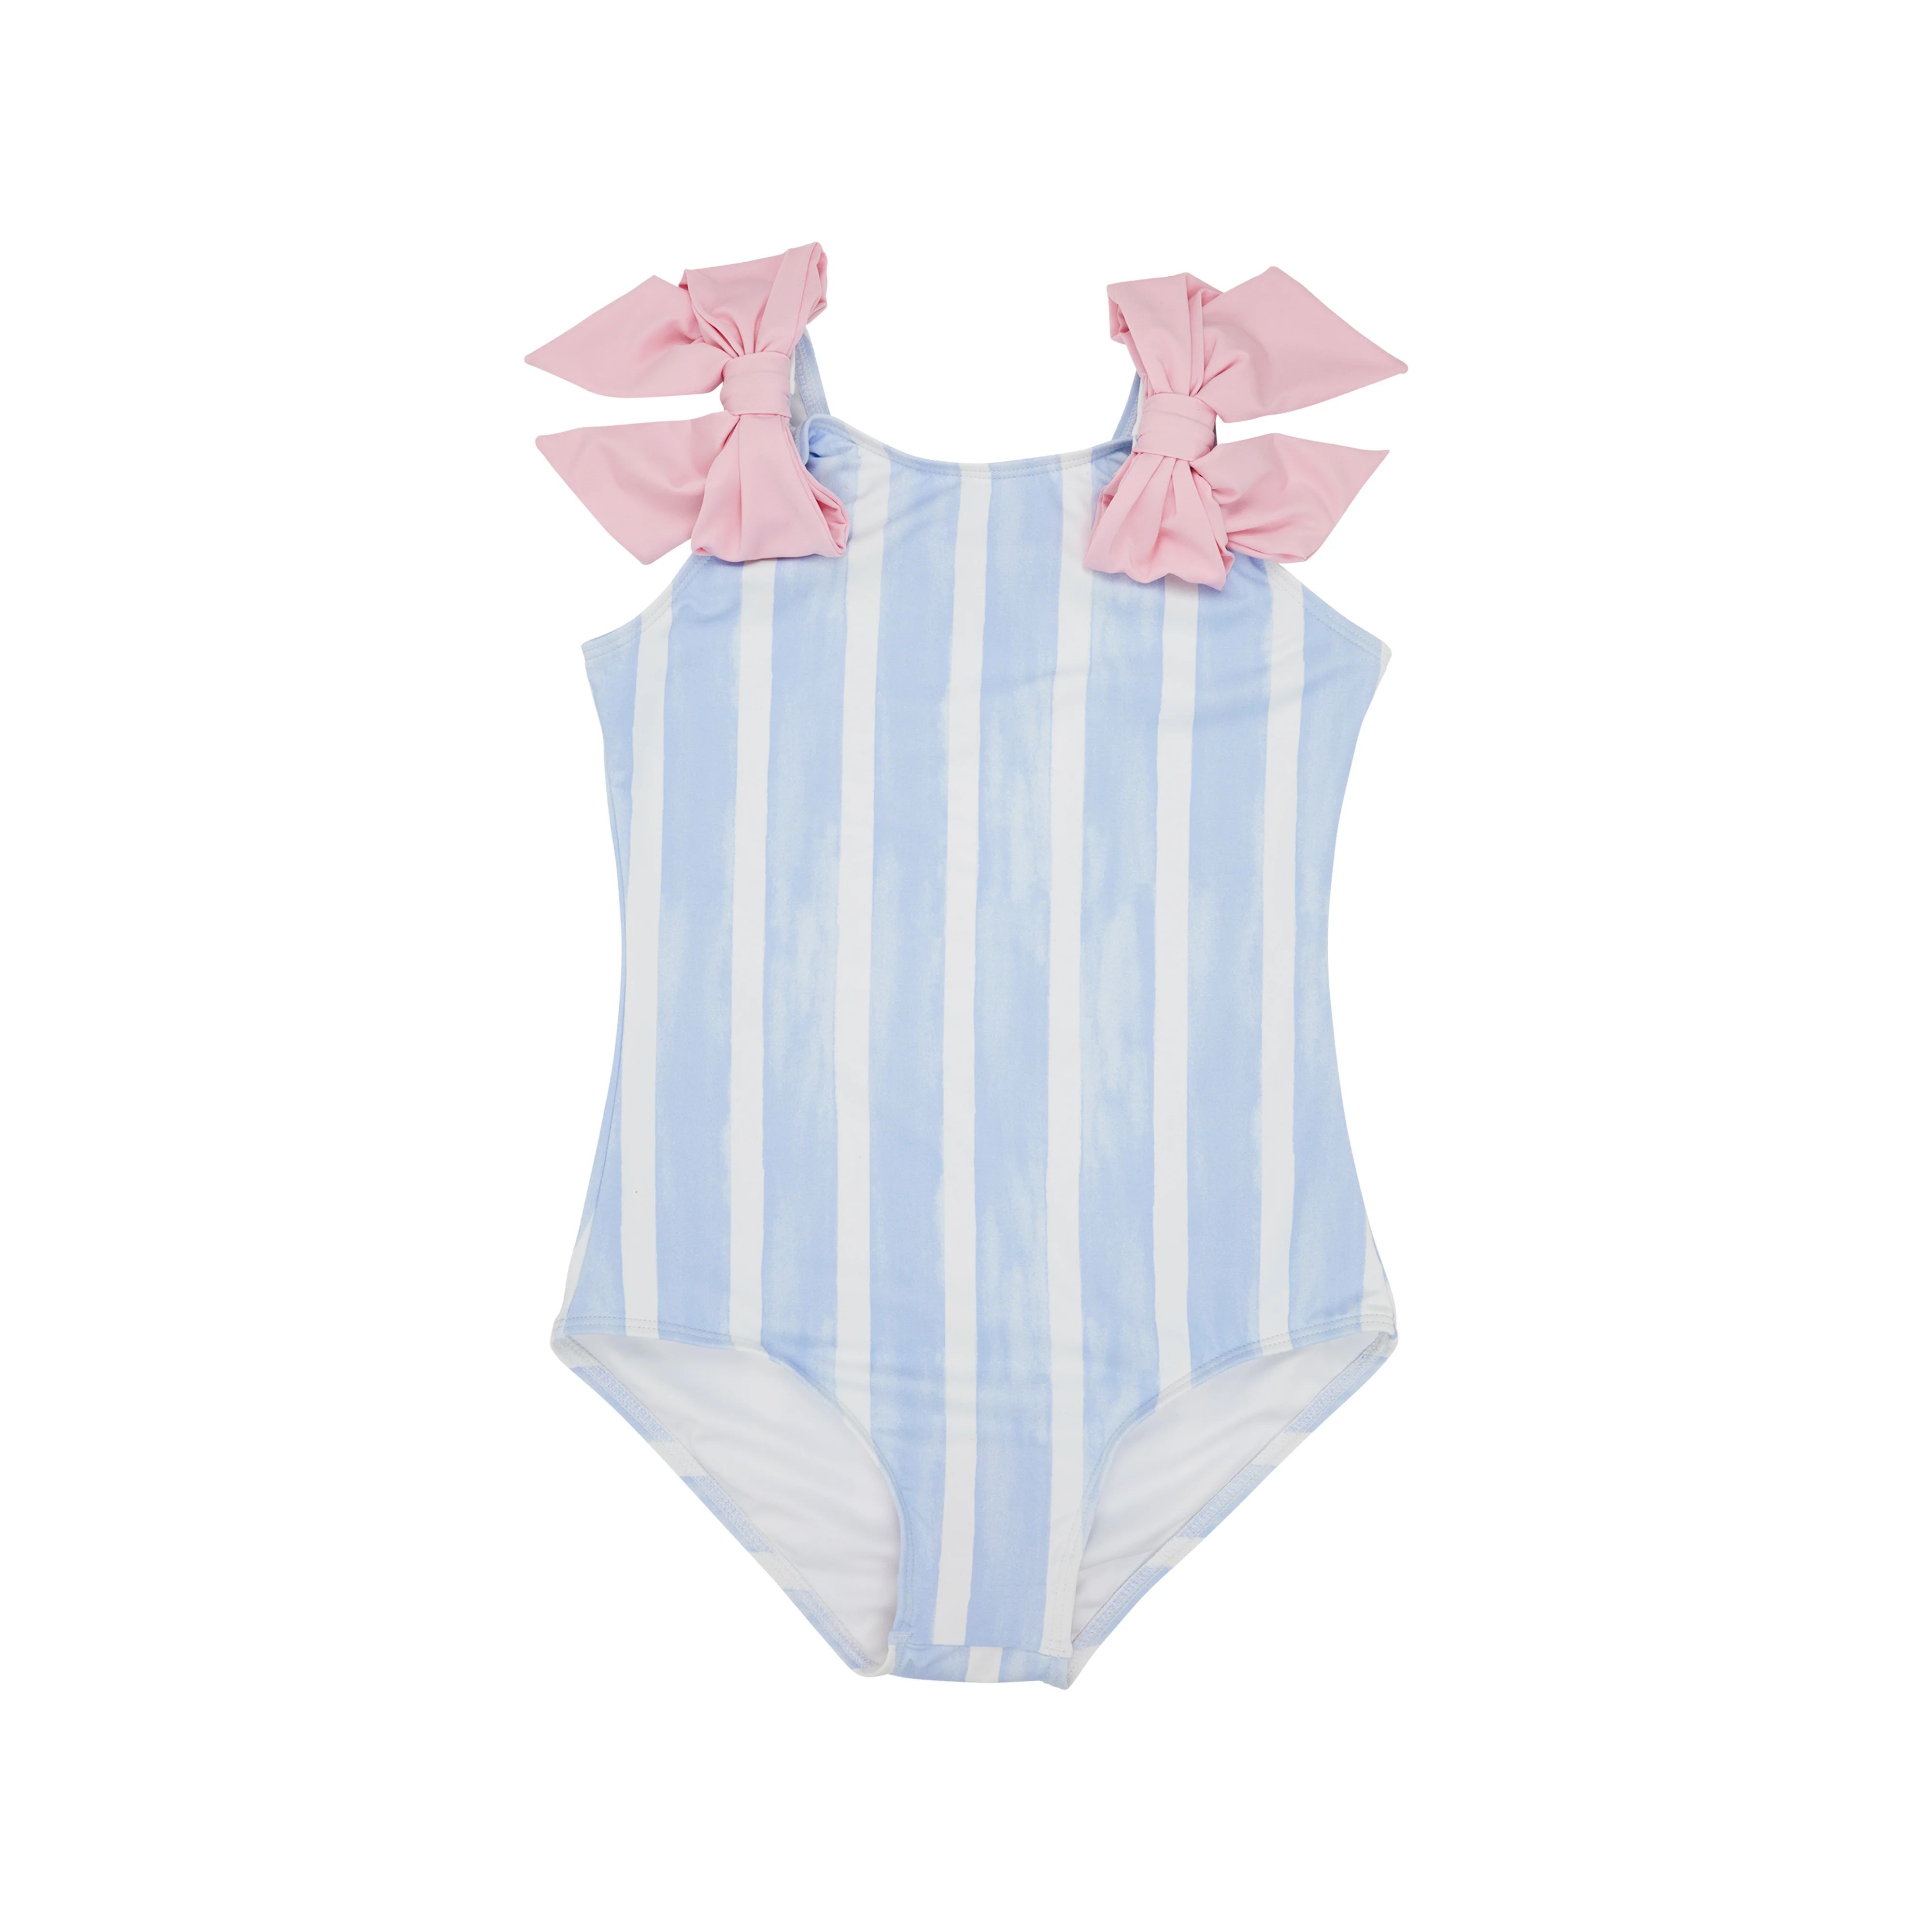 Edisto Beach Bathing Suit - Sea Wall Stripe with Palm Beach Pink | The Beaufort Bonnet Company